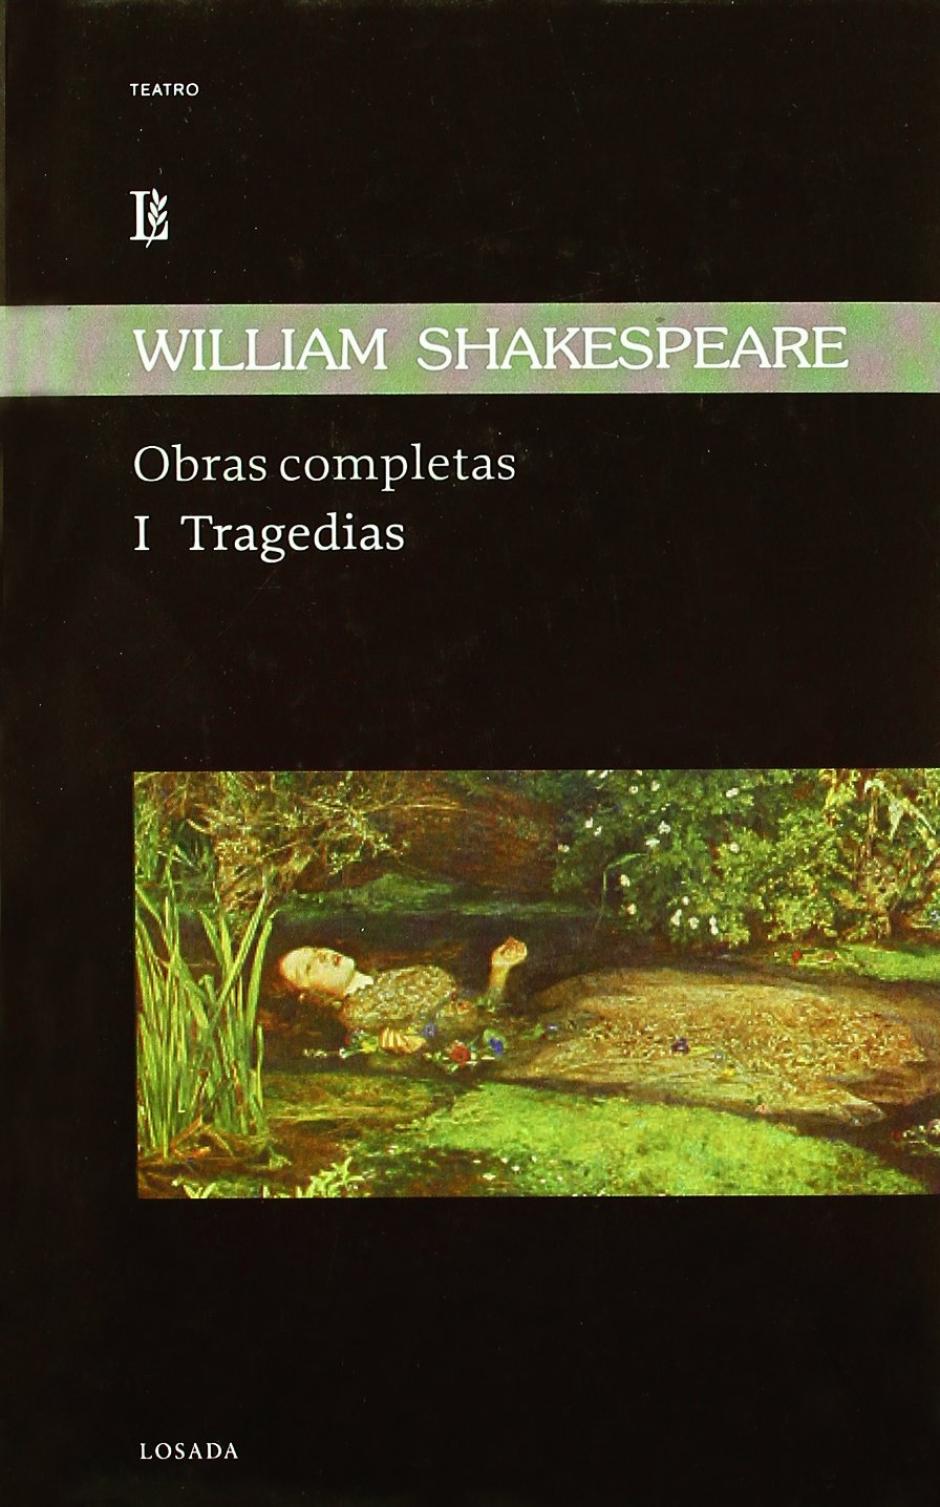 «Shakespeare. Obras completas»